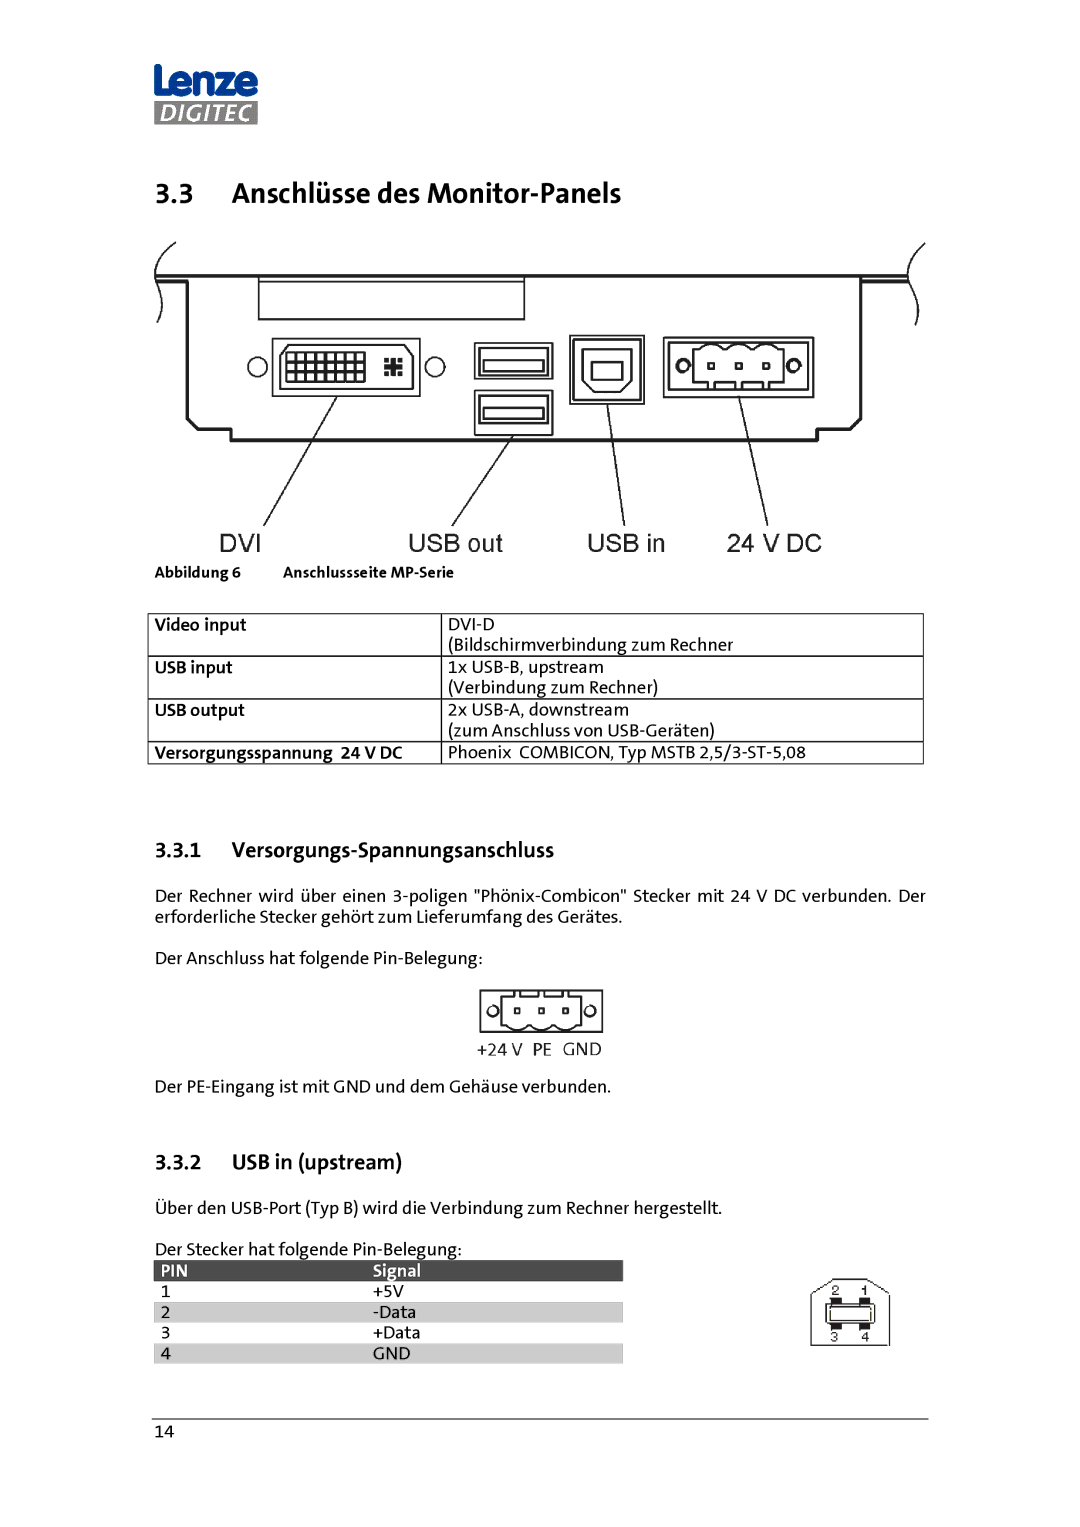 DigiTech MP 600-9000 DVI manual Anschlüsse des Monitor-Panels, Versorgungs-Spannungsanschluss, USB in upstream, Signal 